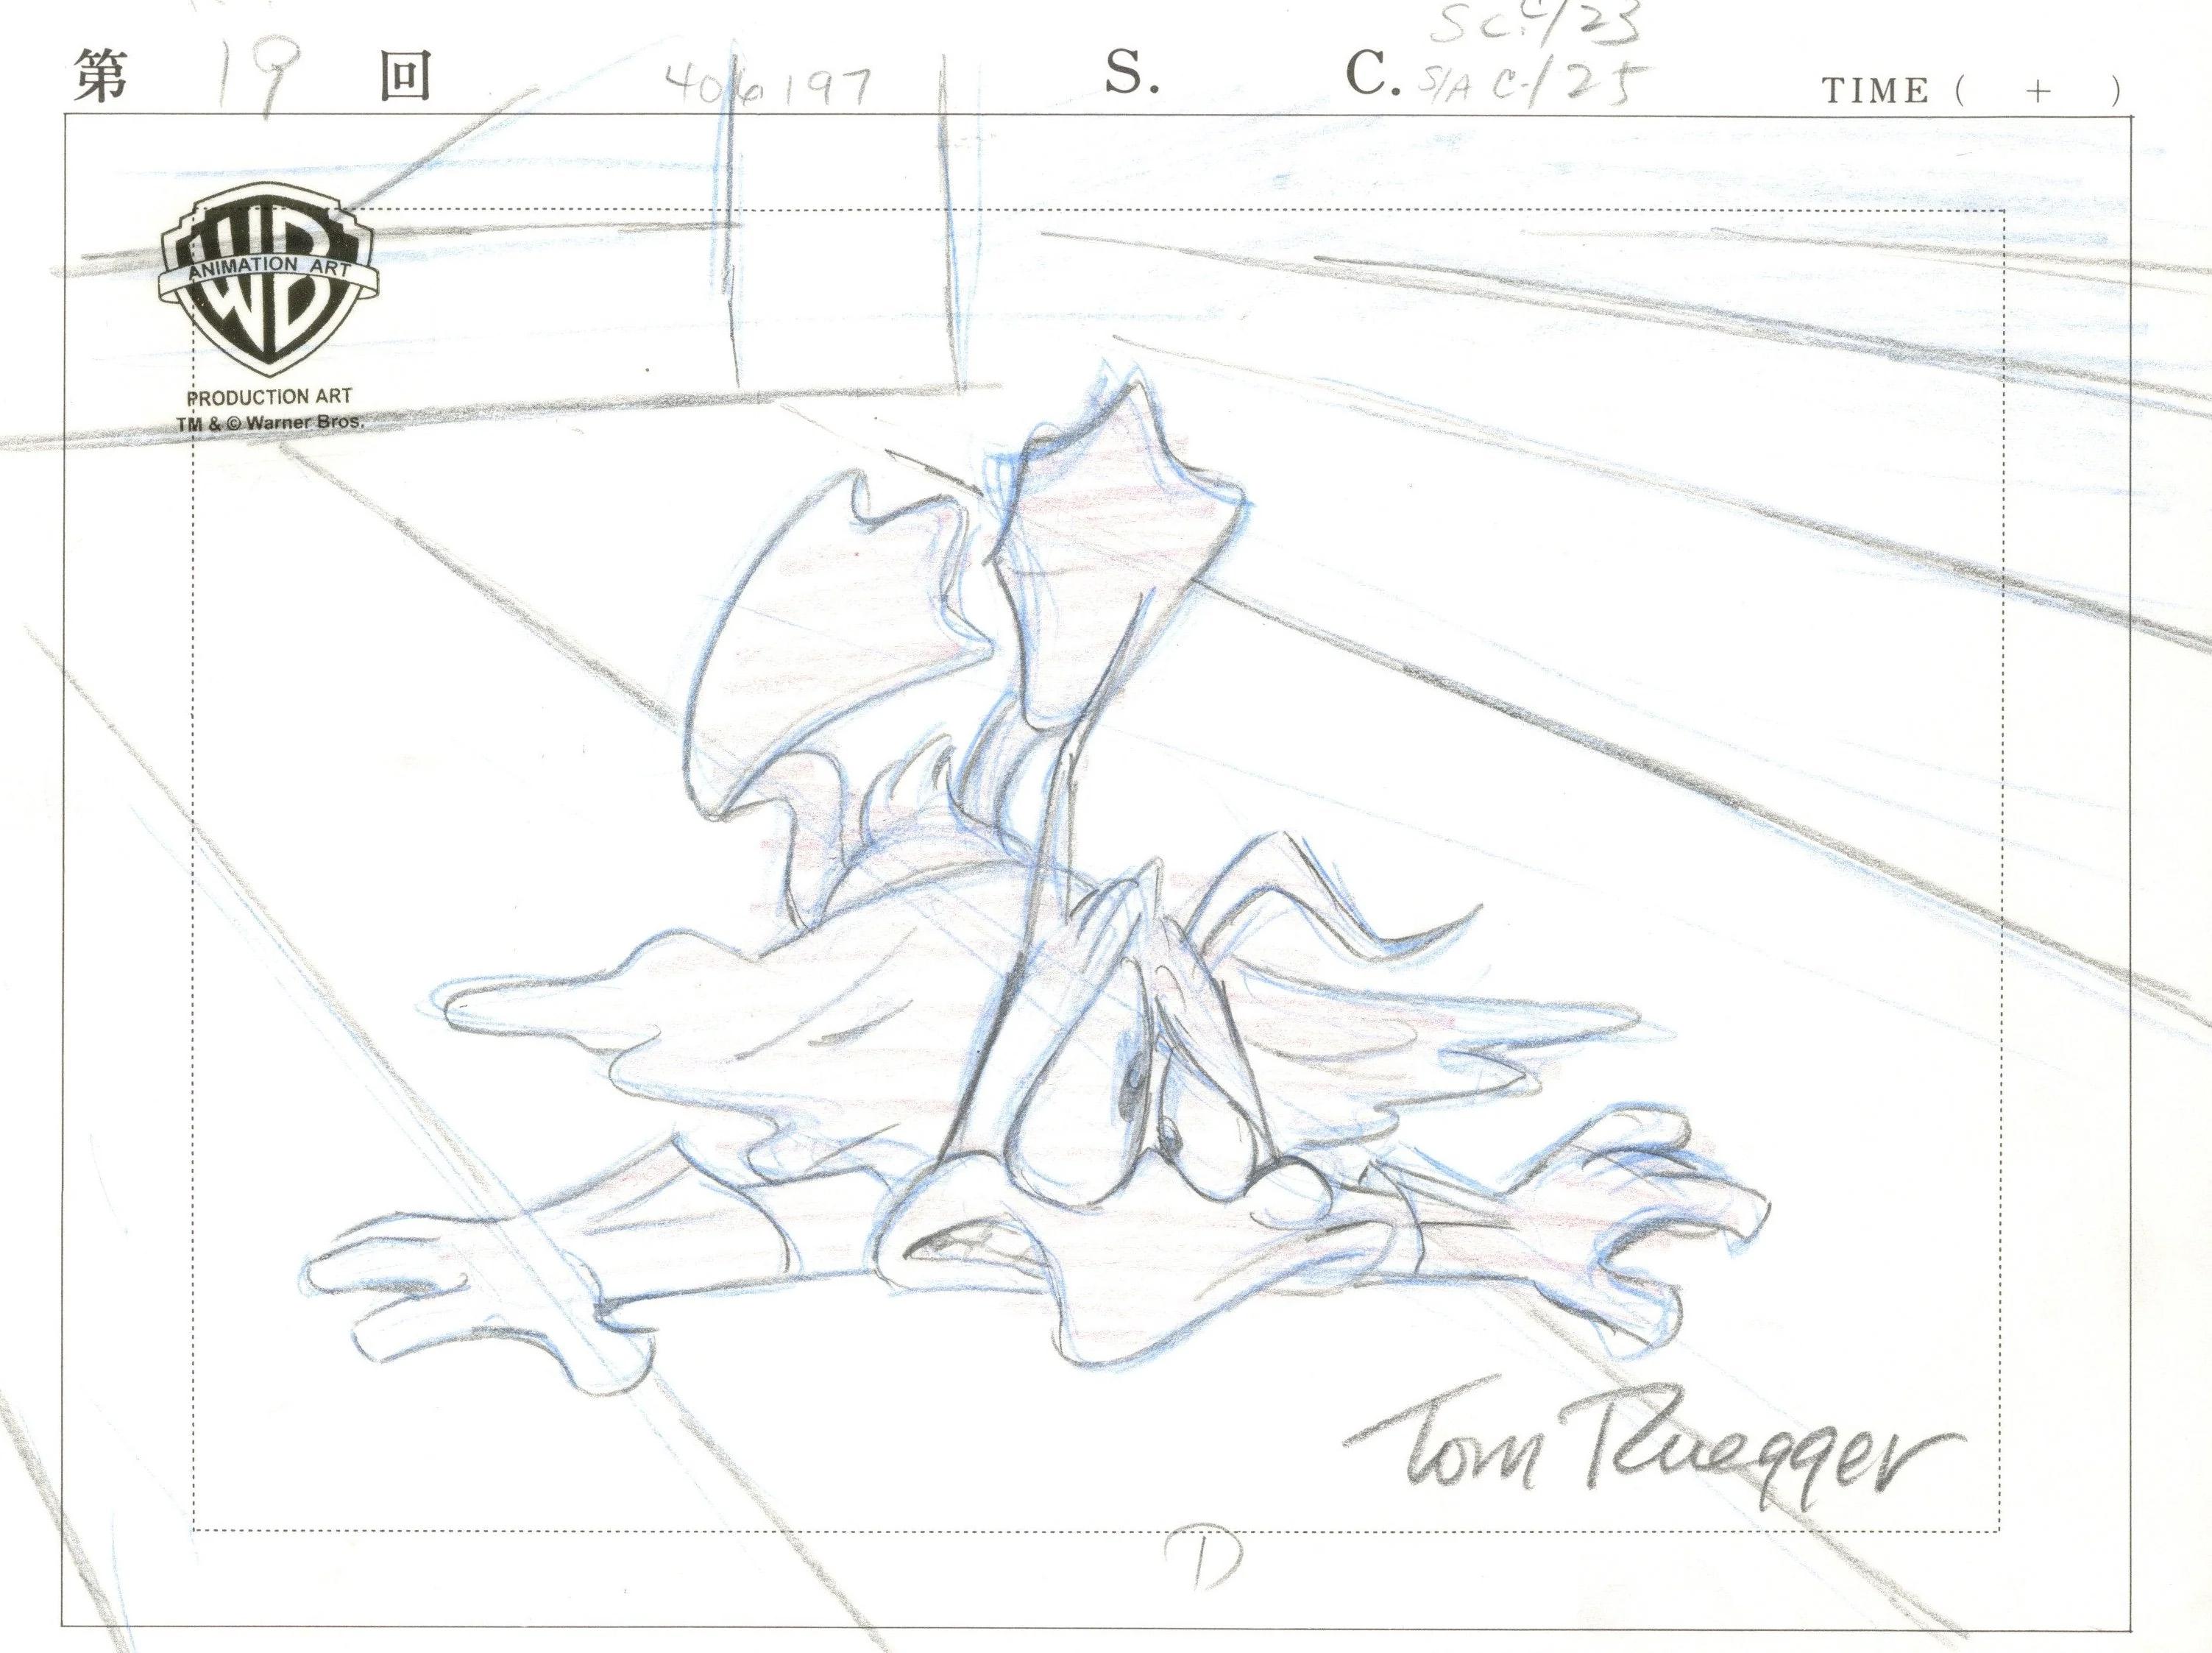 Tiny Toons Original Production Drawing Signed by Tom Ruegger: Batduck - Art by Warner Bros. Studio Artists